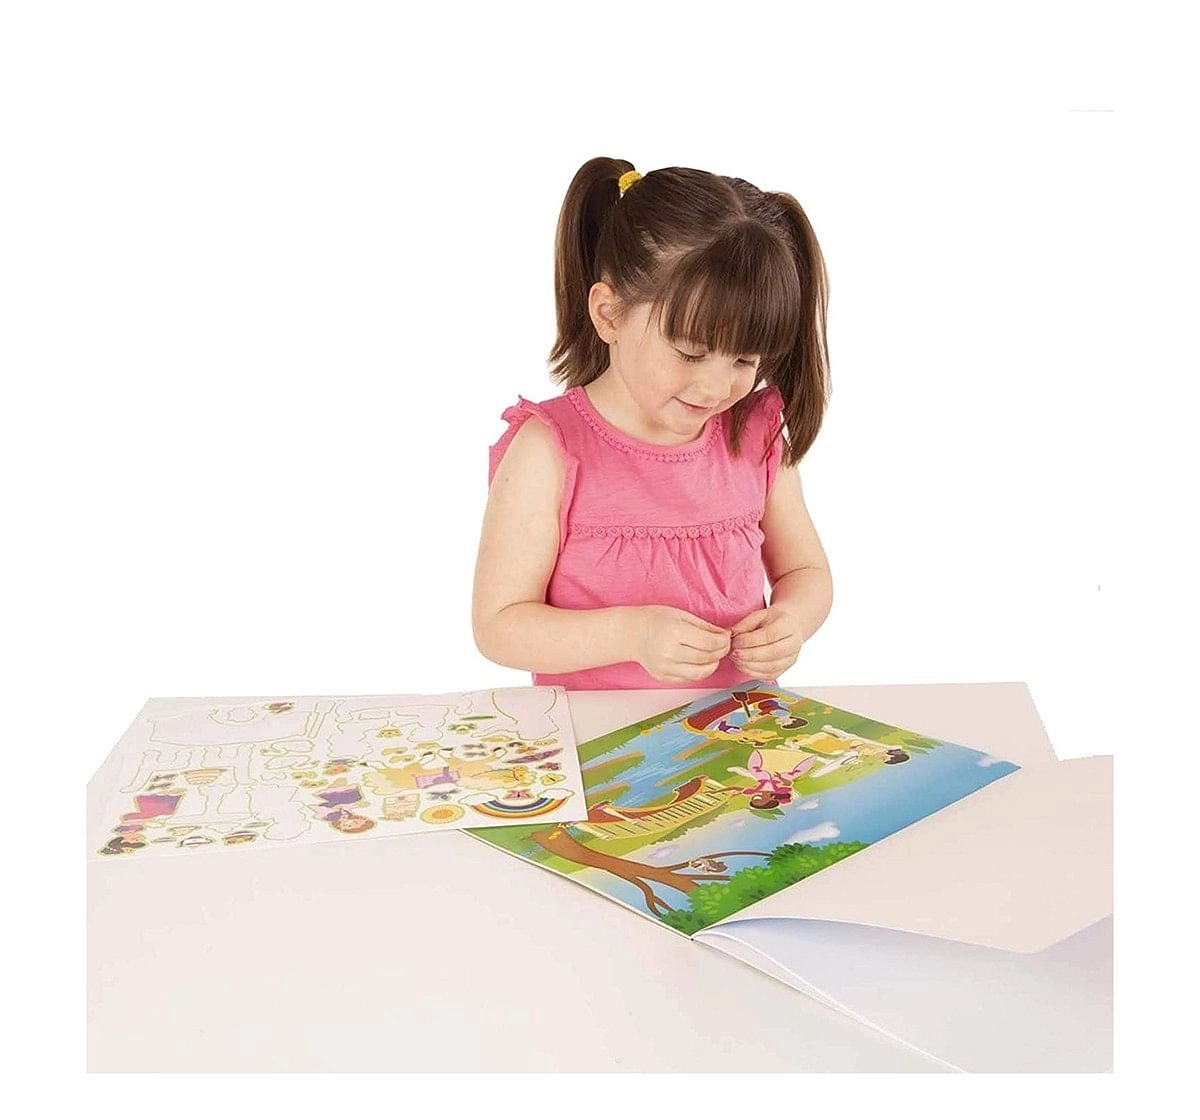  Melissa And Doug Reusable Sticker Pad: Princess Castle DIY Art & Craft Kits for age 5Y+ 